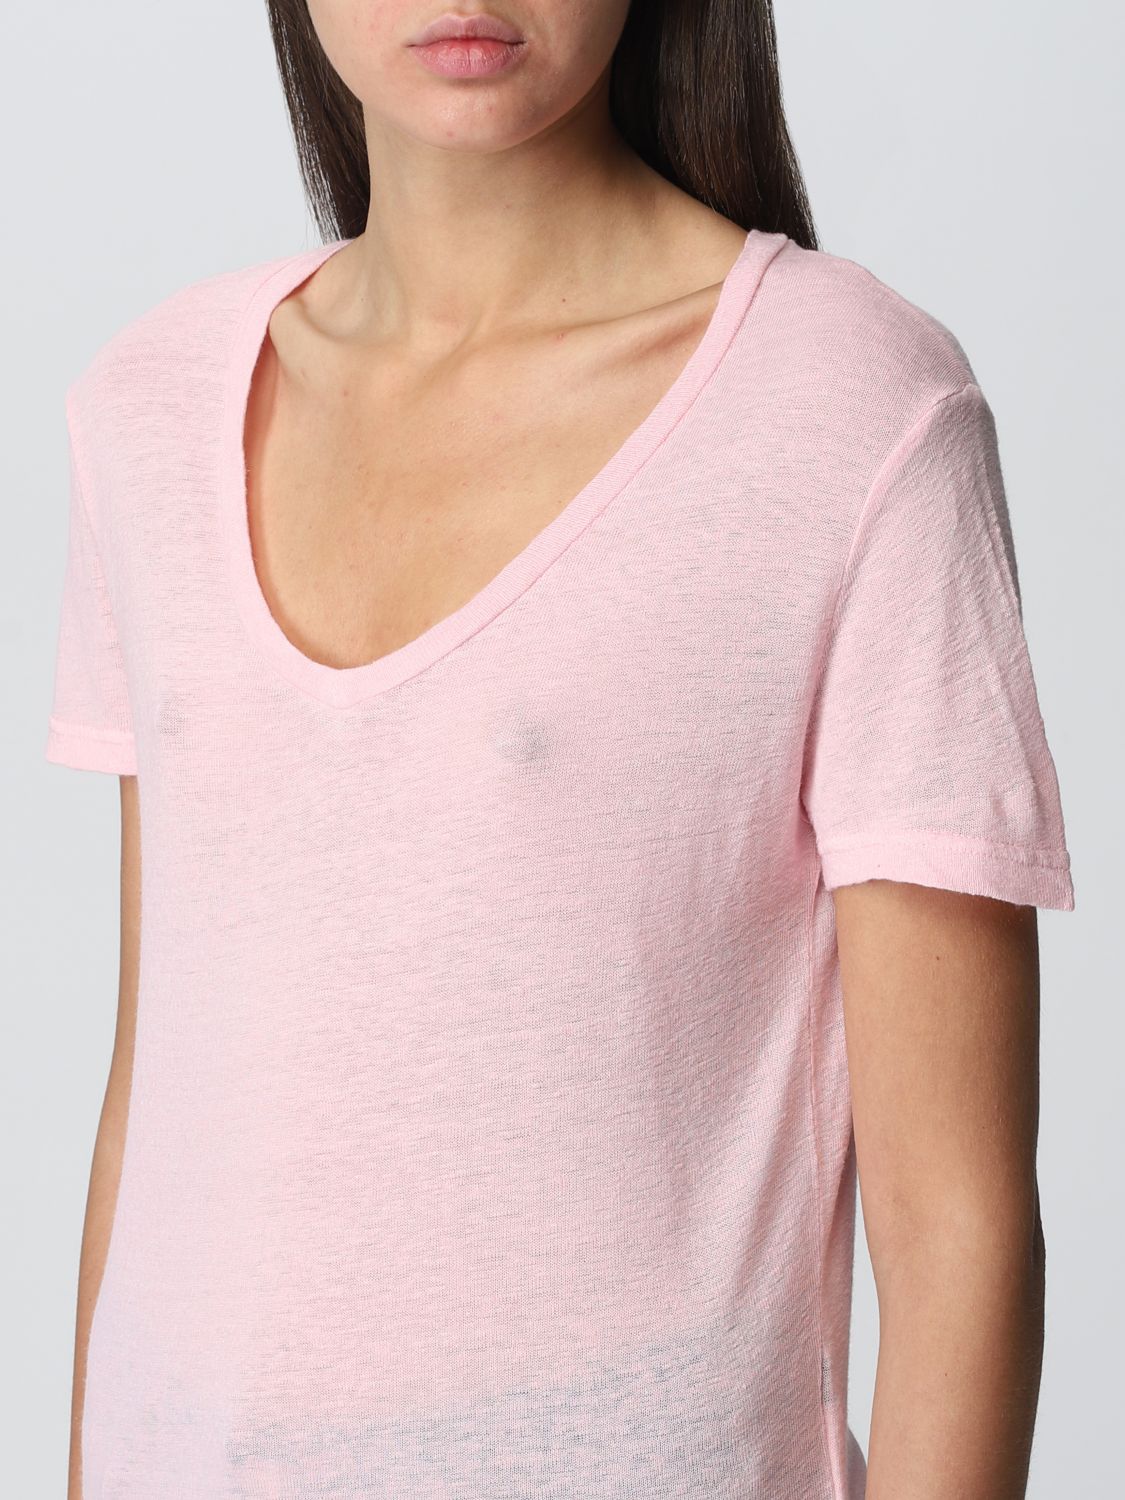 T-shirt Roy Rogers: T-shirt damen Roy Rogers pink 3